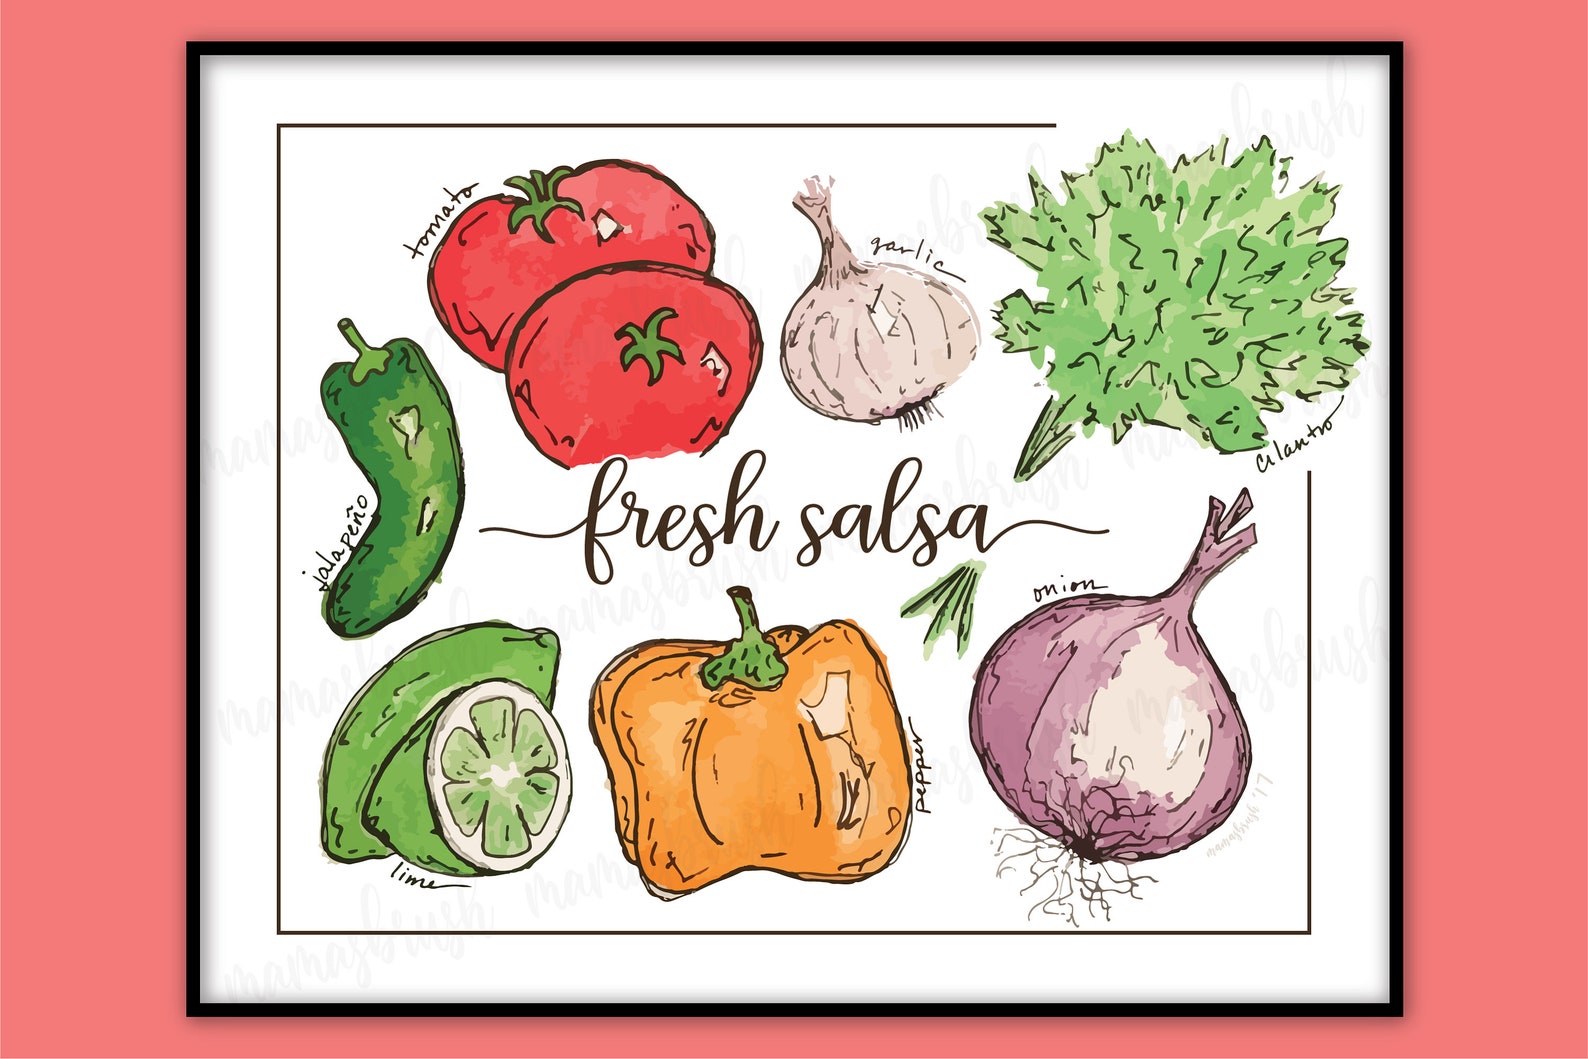 Fresh Salsa Watercolor Print |
mamasbrush

Fresh salsa veggies kitchen wall art decor. 